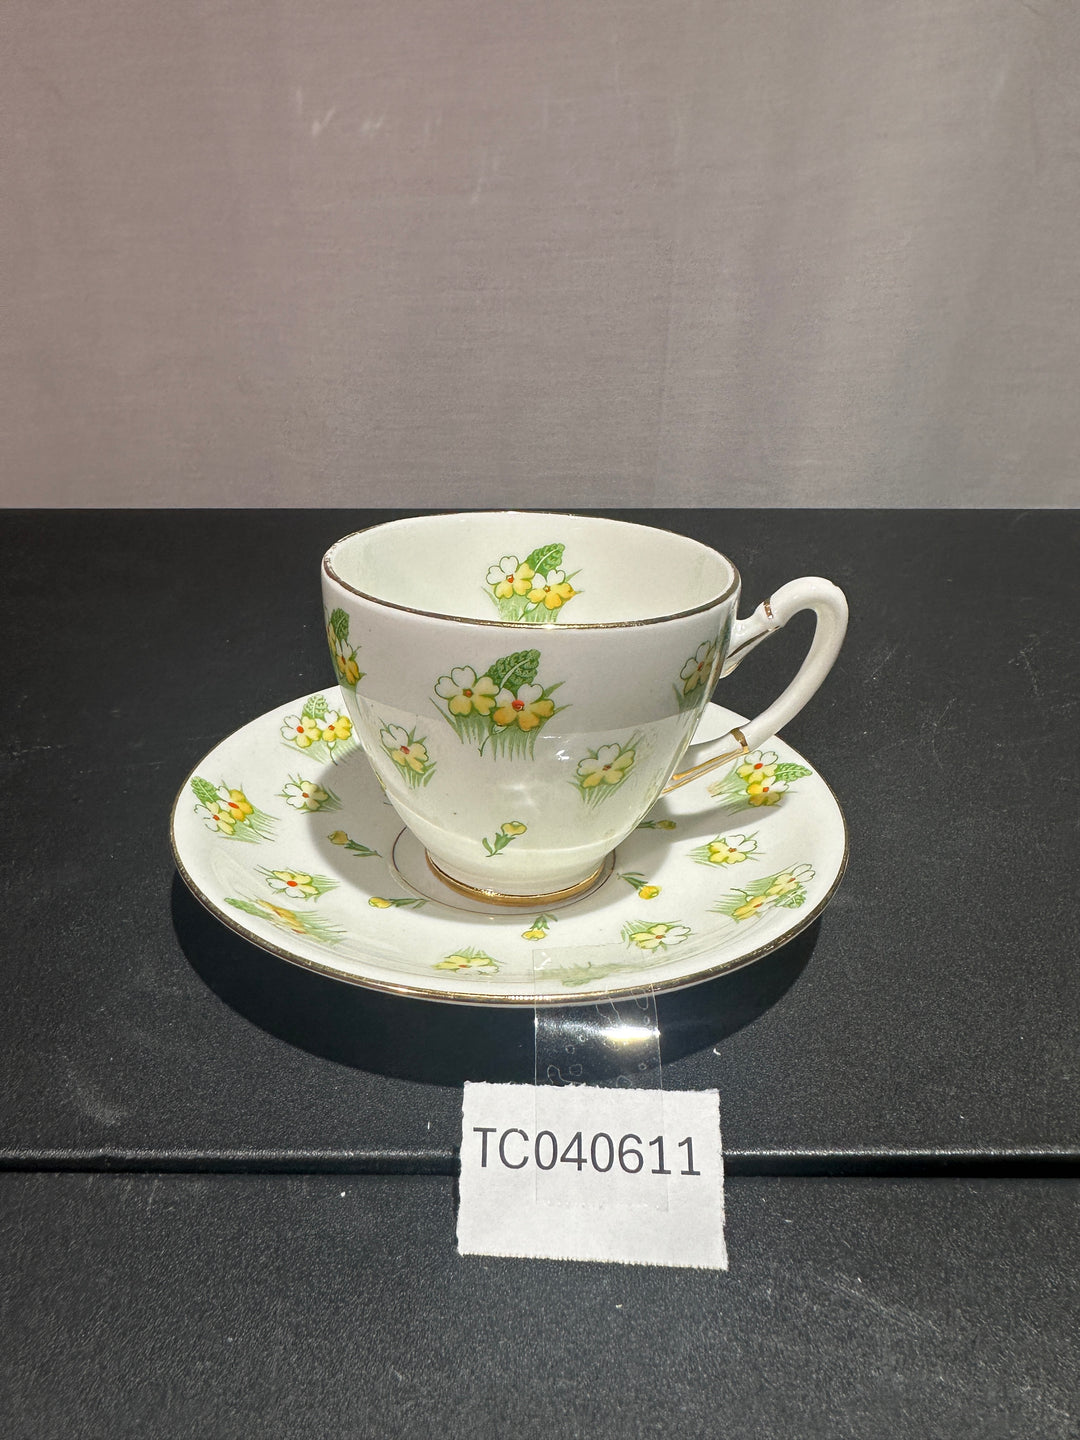 Tea Cup TC040611